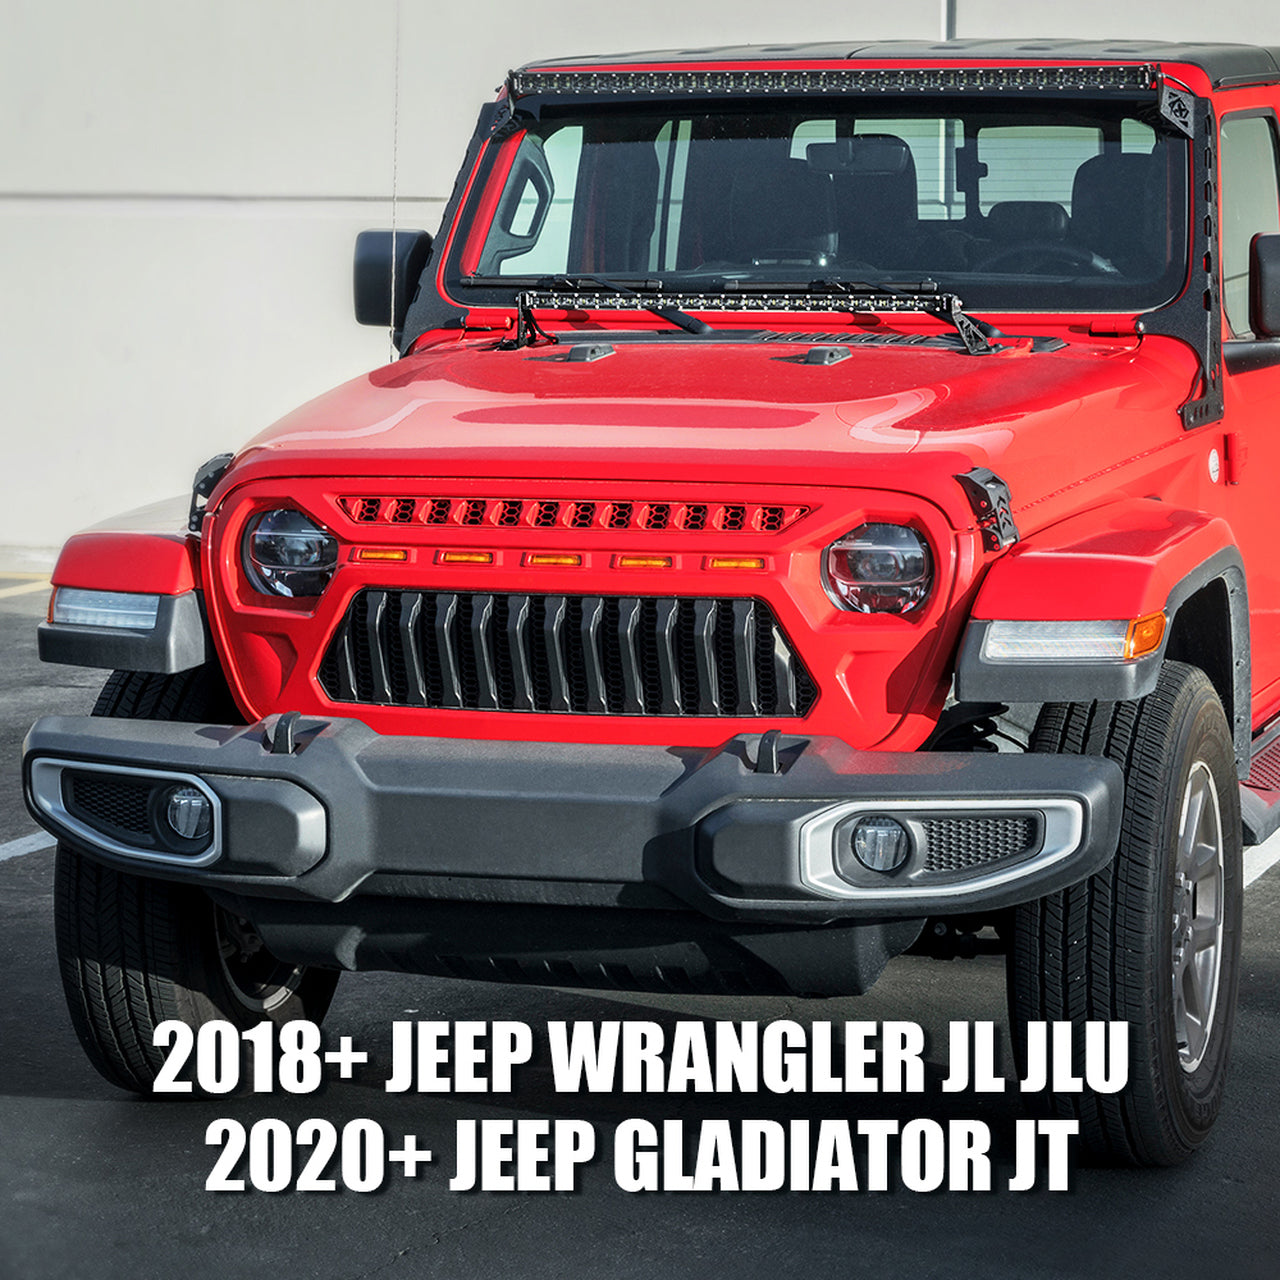 Crawlertec Prevail Series Hood Mounting Brackets for 30" to 32" LED Light Bars For 2018+ Jeep Wrangler JL & Gladiator JT